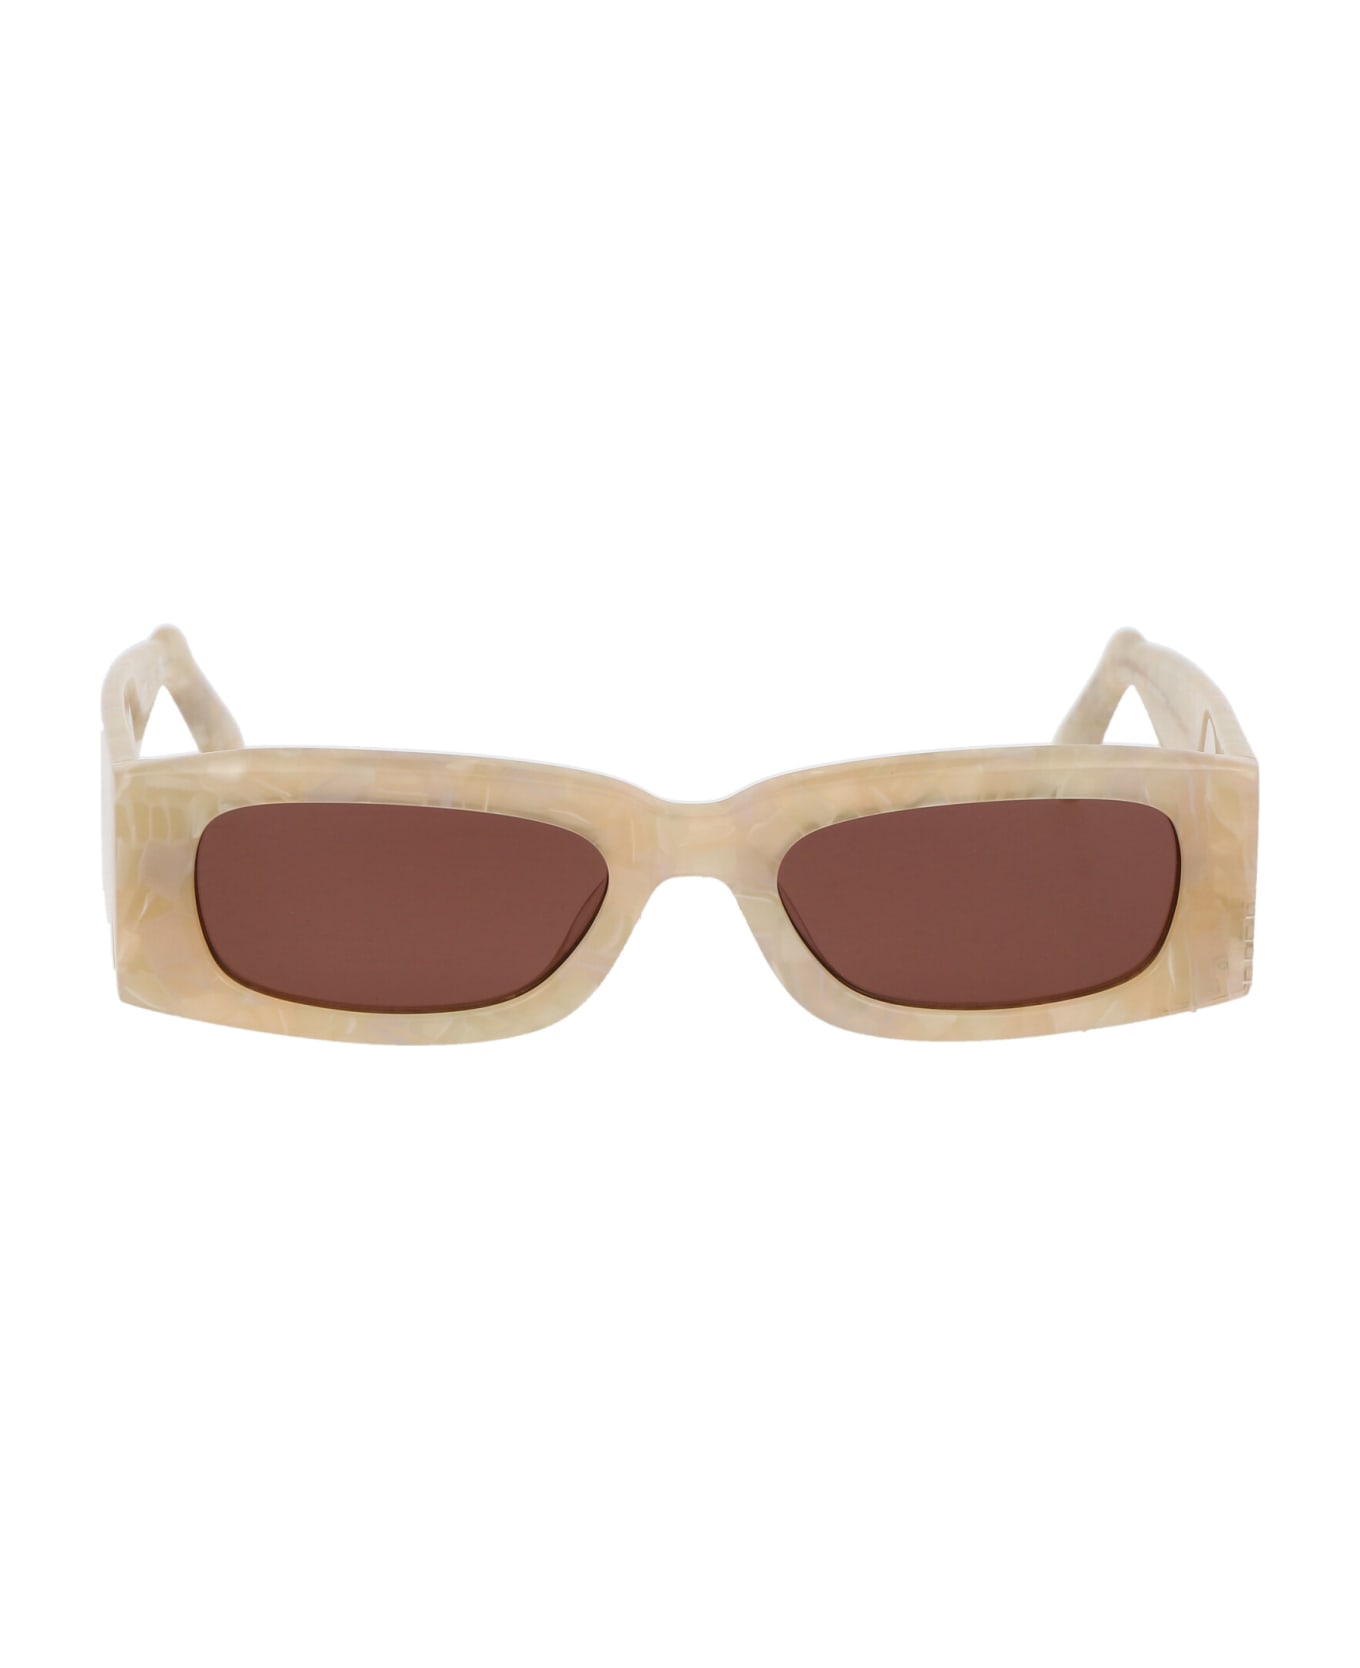 GCDS Gd0020 Sunglasses - 25S Avorio/Bordeaux サングラス